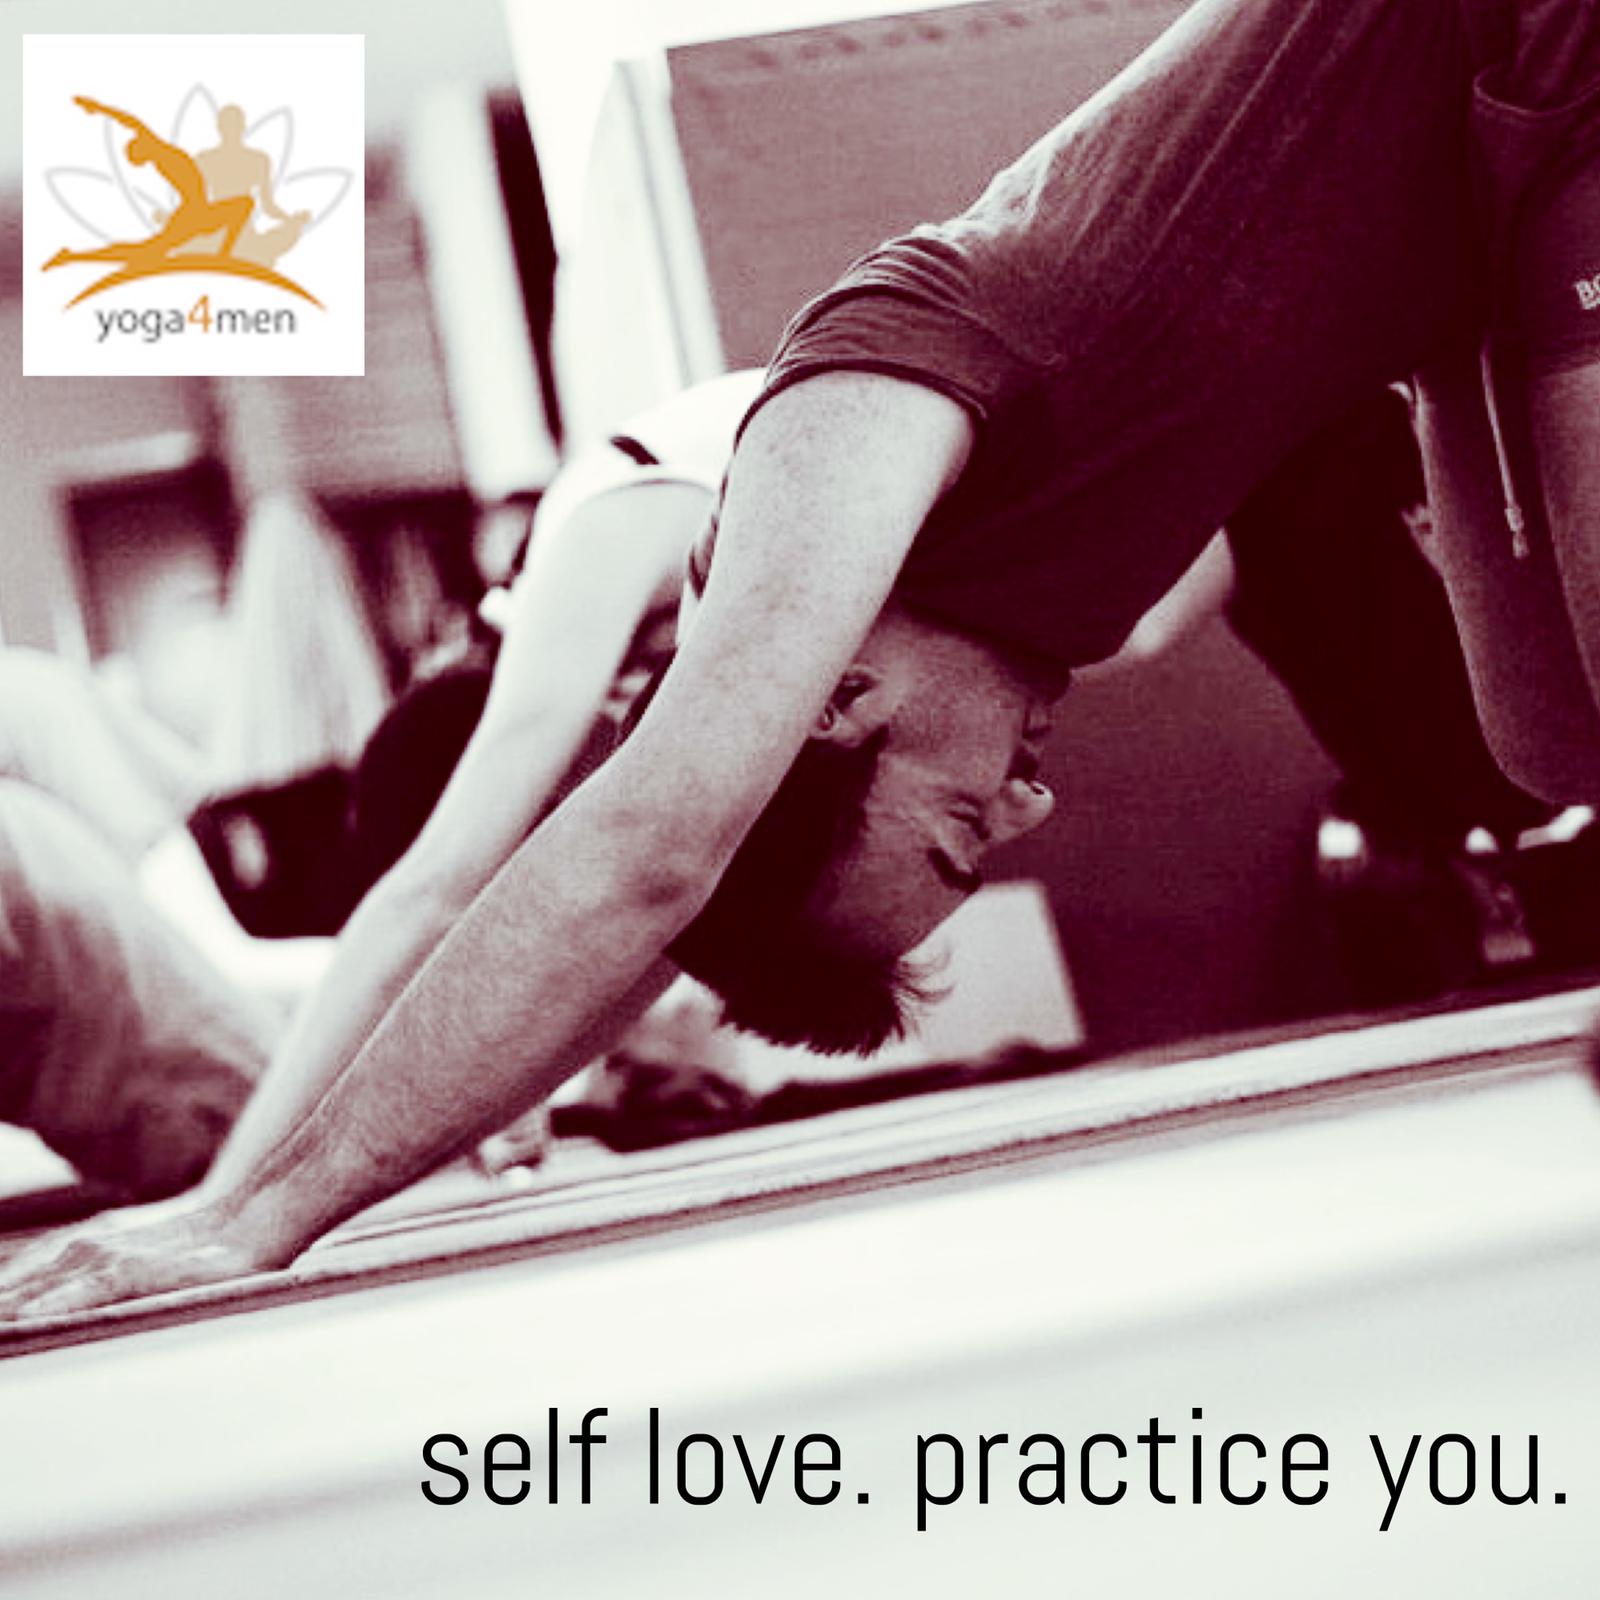 Self Love Practice You